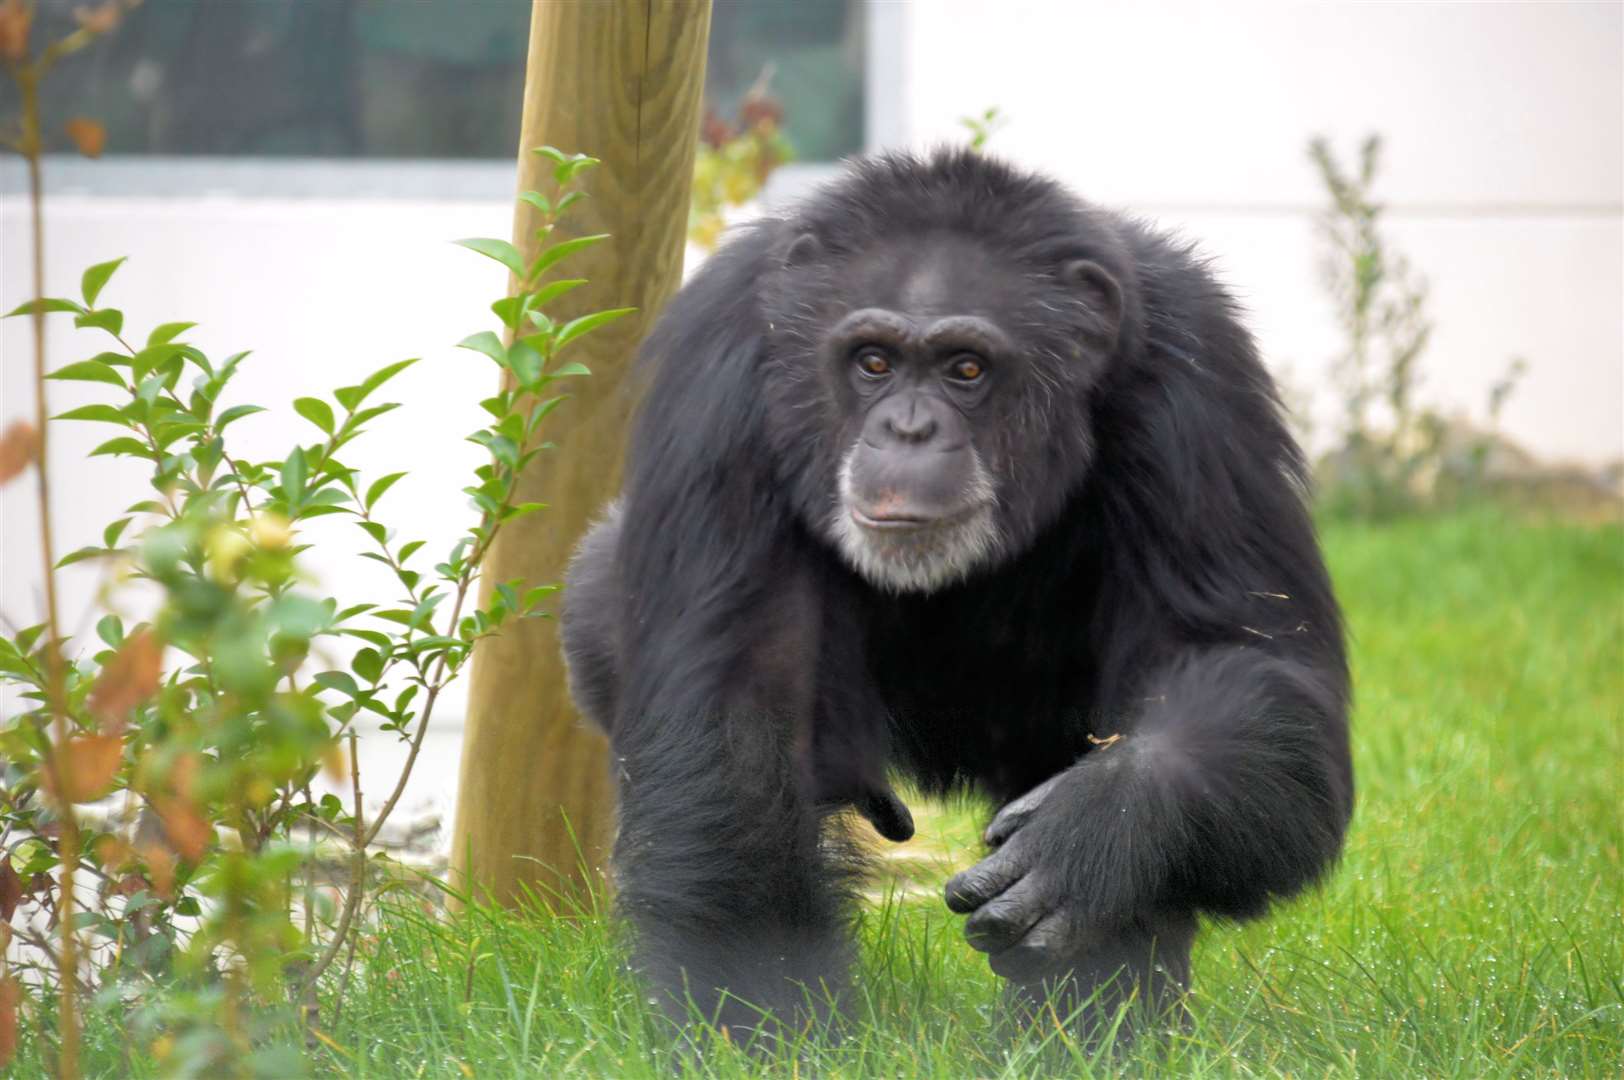 A chimp at Wingham Wildlife Park